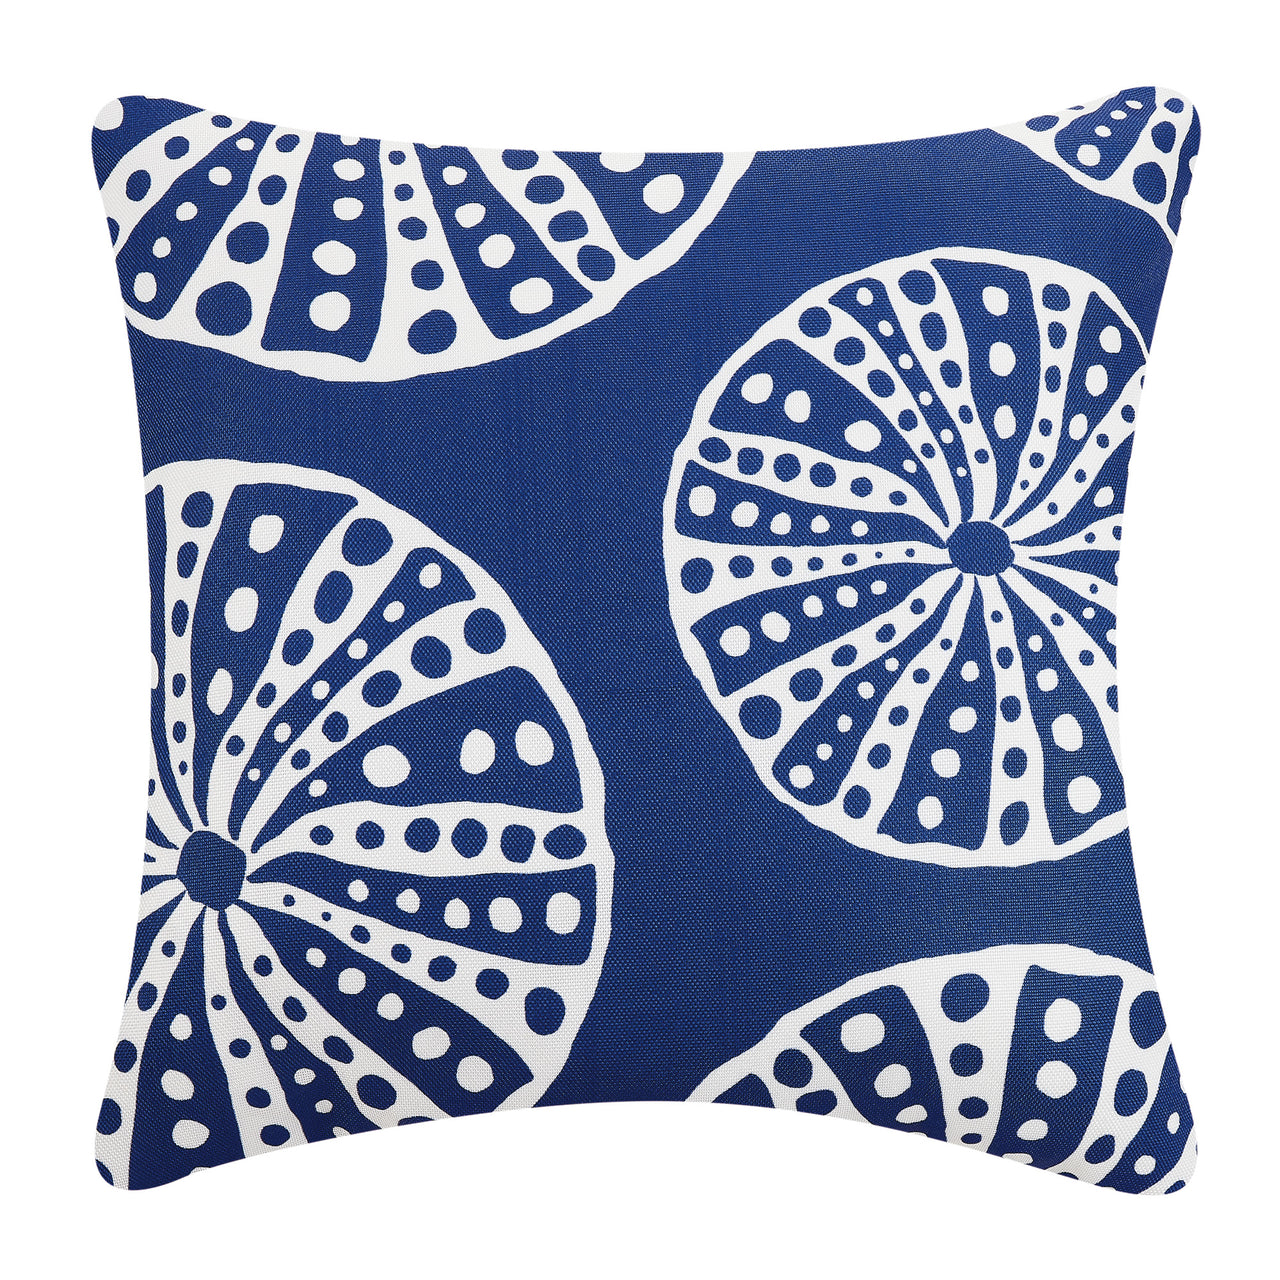 Urchin Digital Printed Pillow